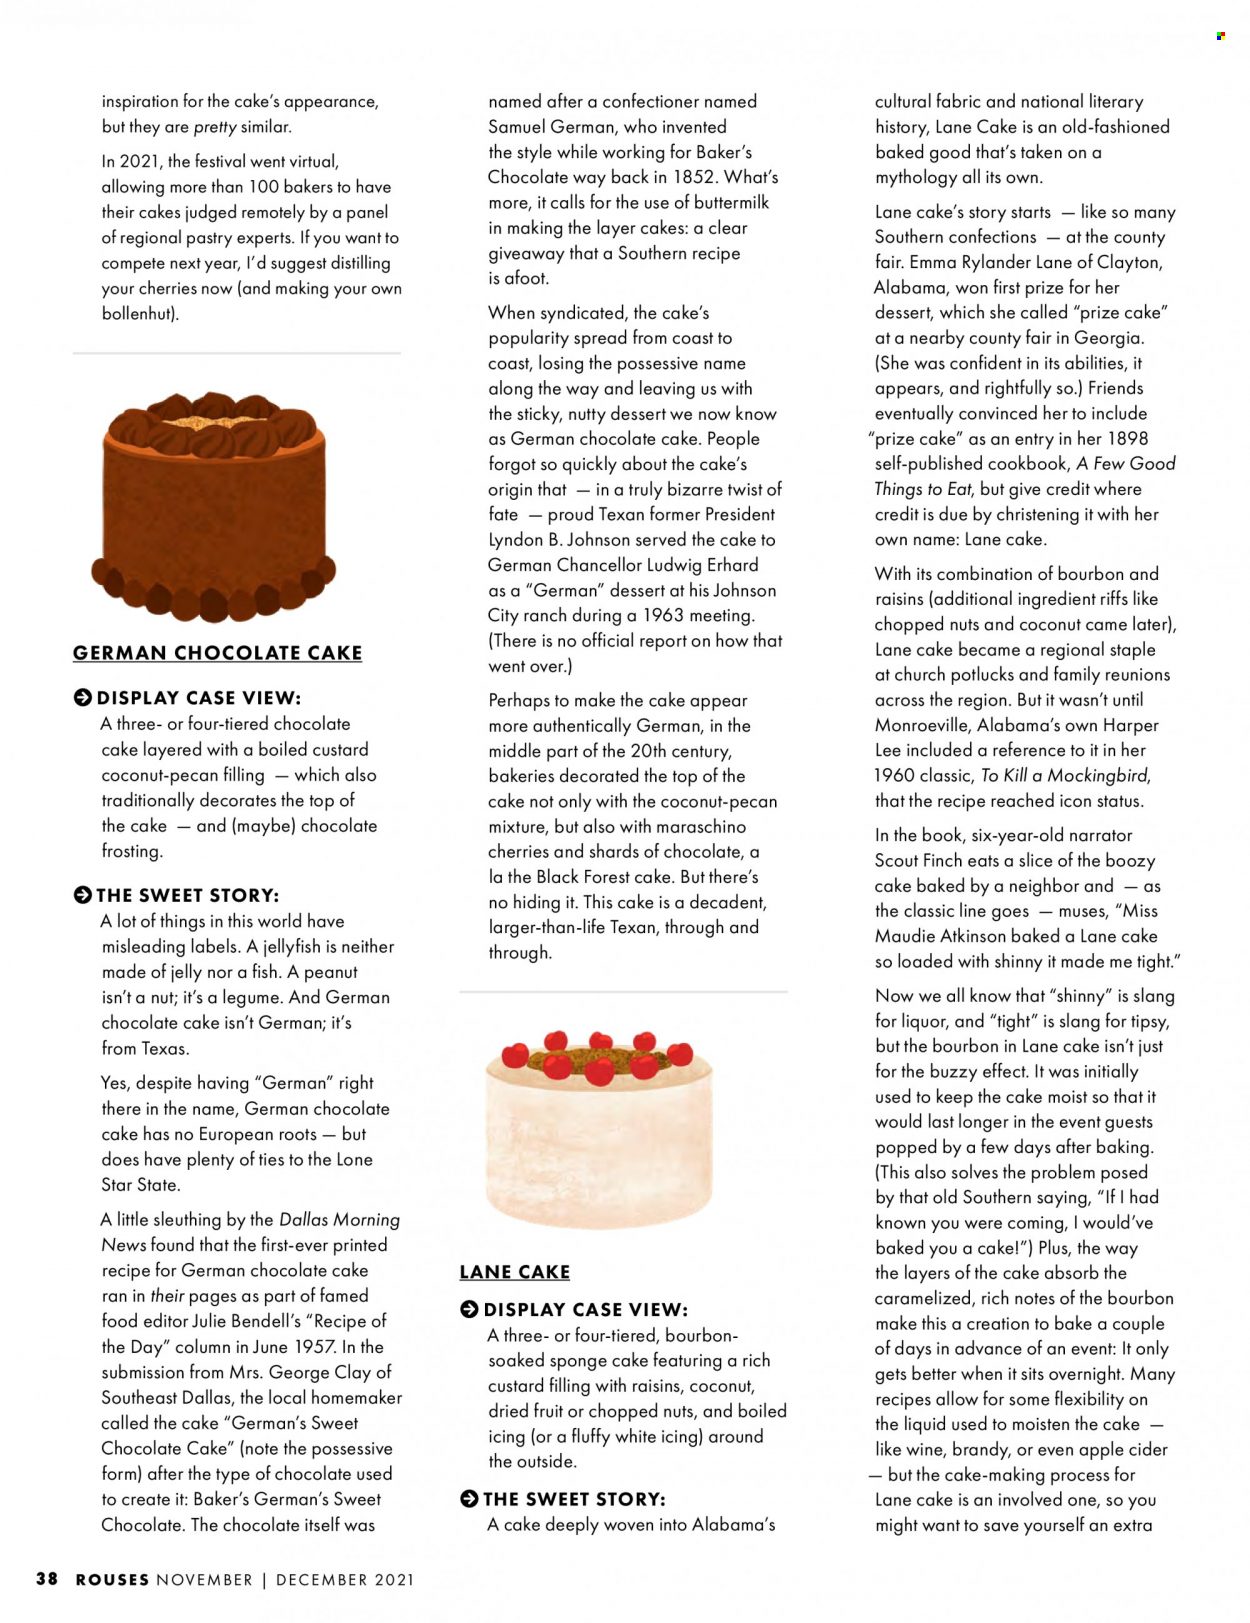 thumbnail - Rouses Markets Flyer - Sales products - cake, sponge cake, chocolate cake, coconut, fish, Président, custard, buttermilk, jelly, frosting, Maraschino cherries, apple cider, bourbon, brandy, liquor, cider, Johnson's, Plenty, Bakers. Page 40.